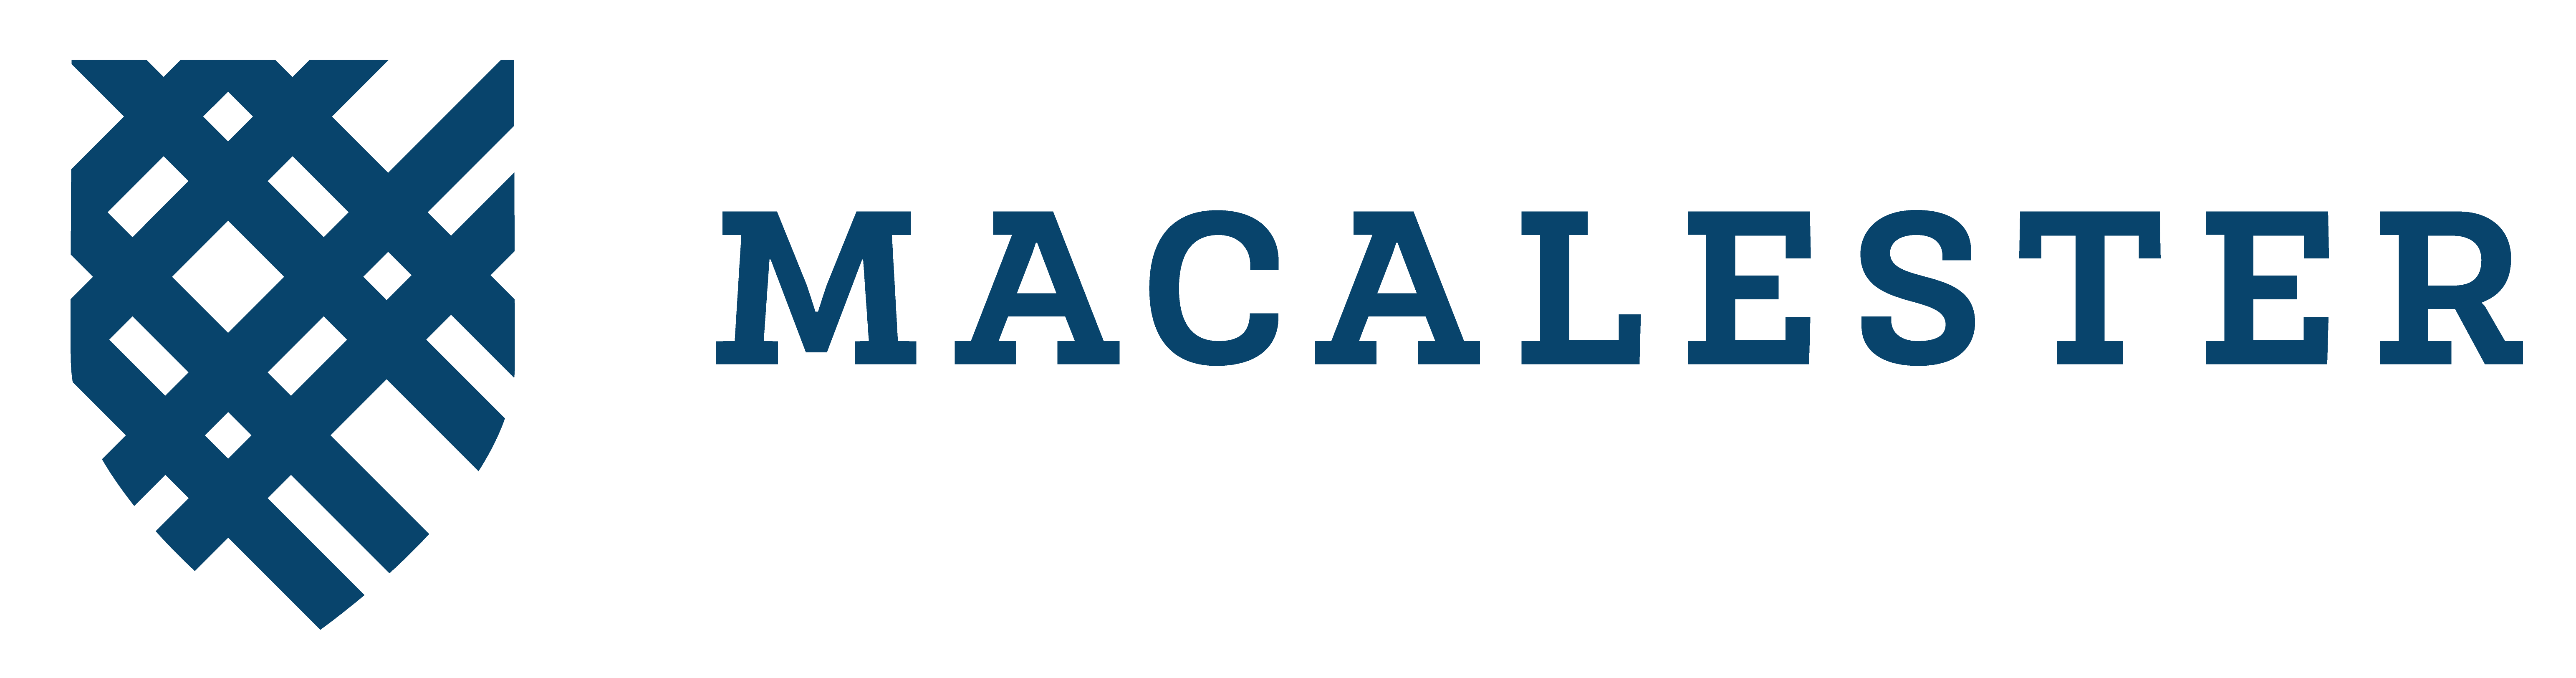 Macalester brandmark and logo